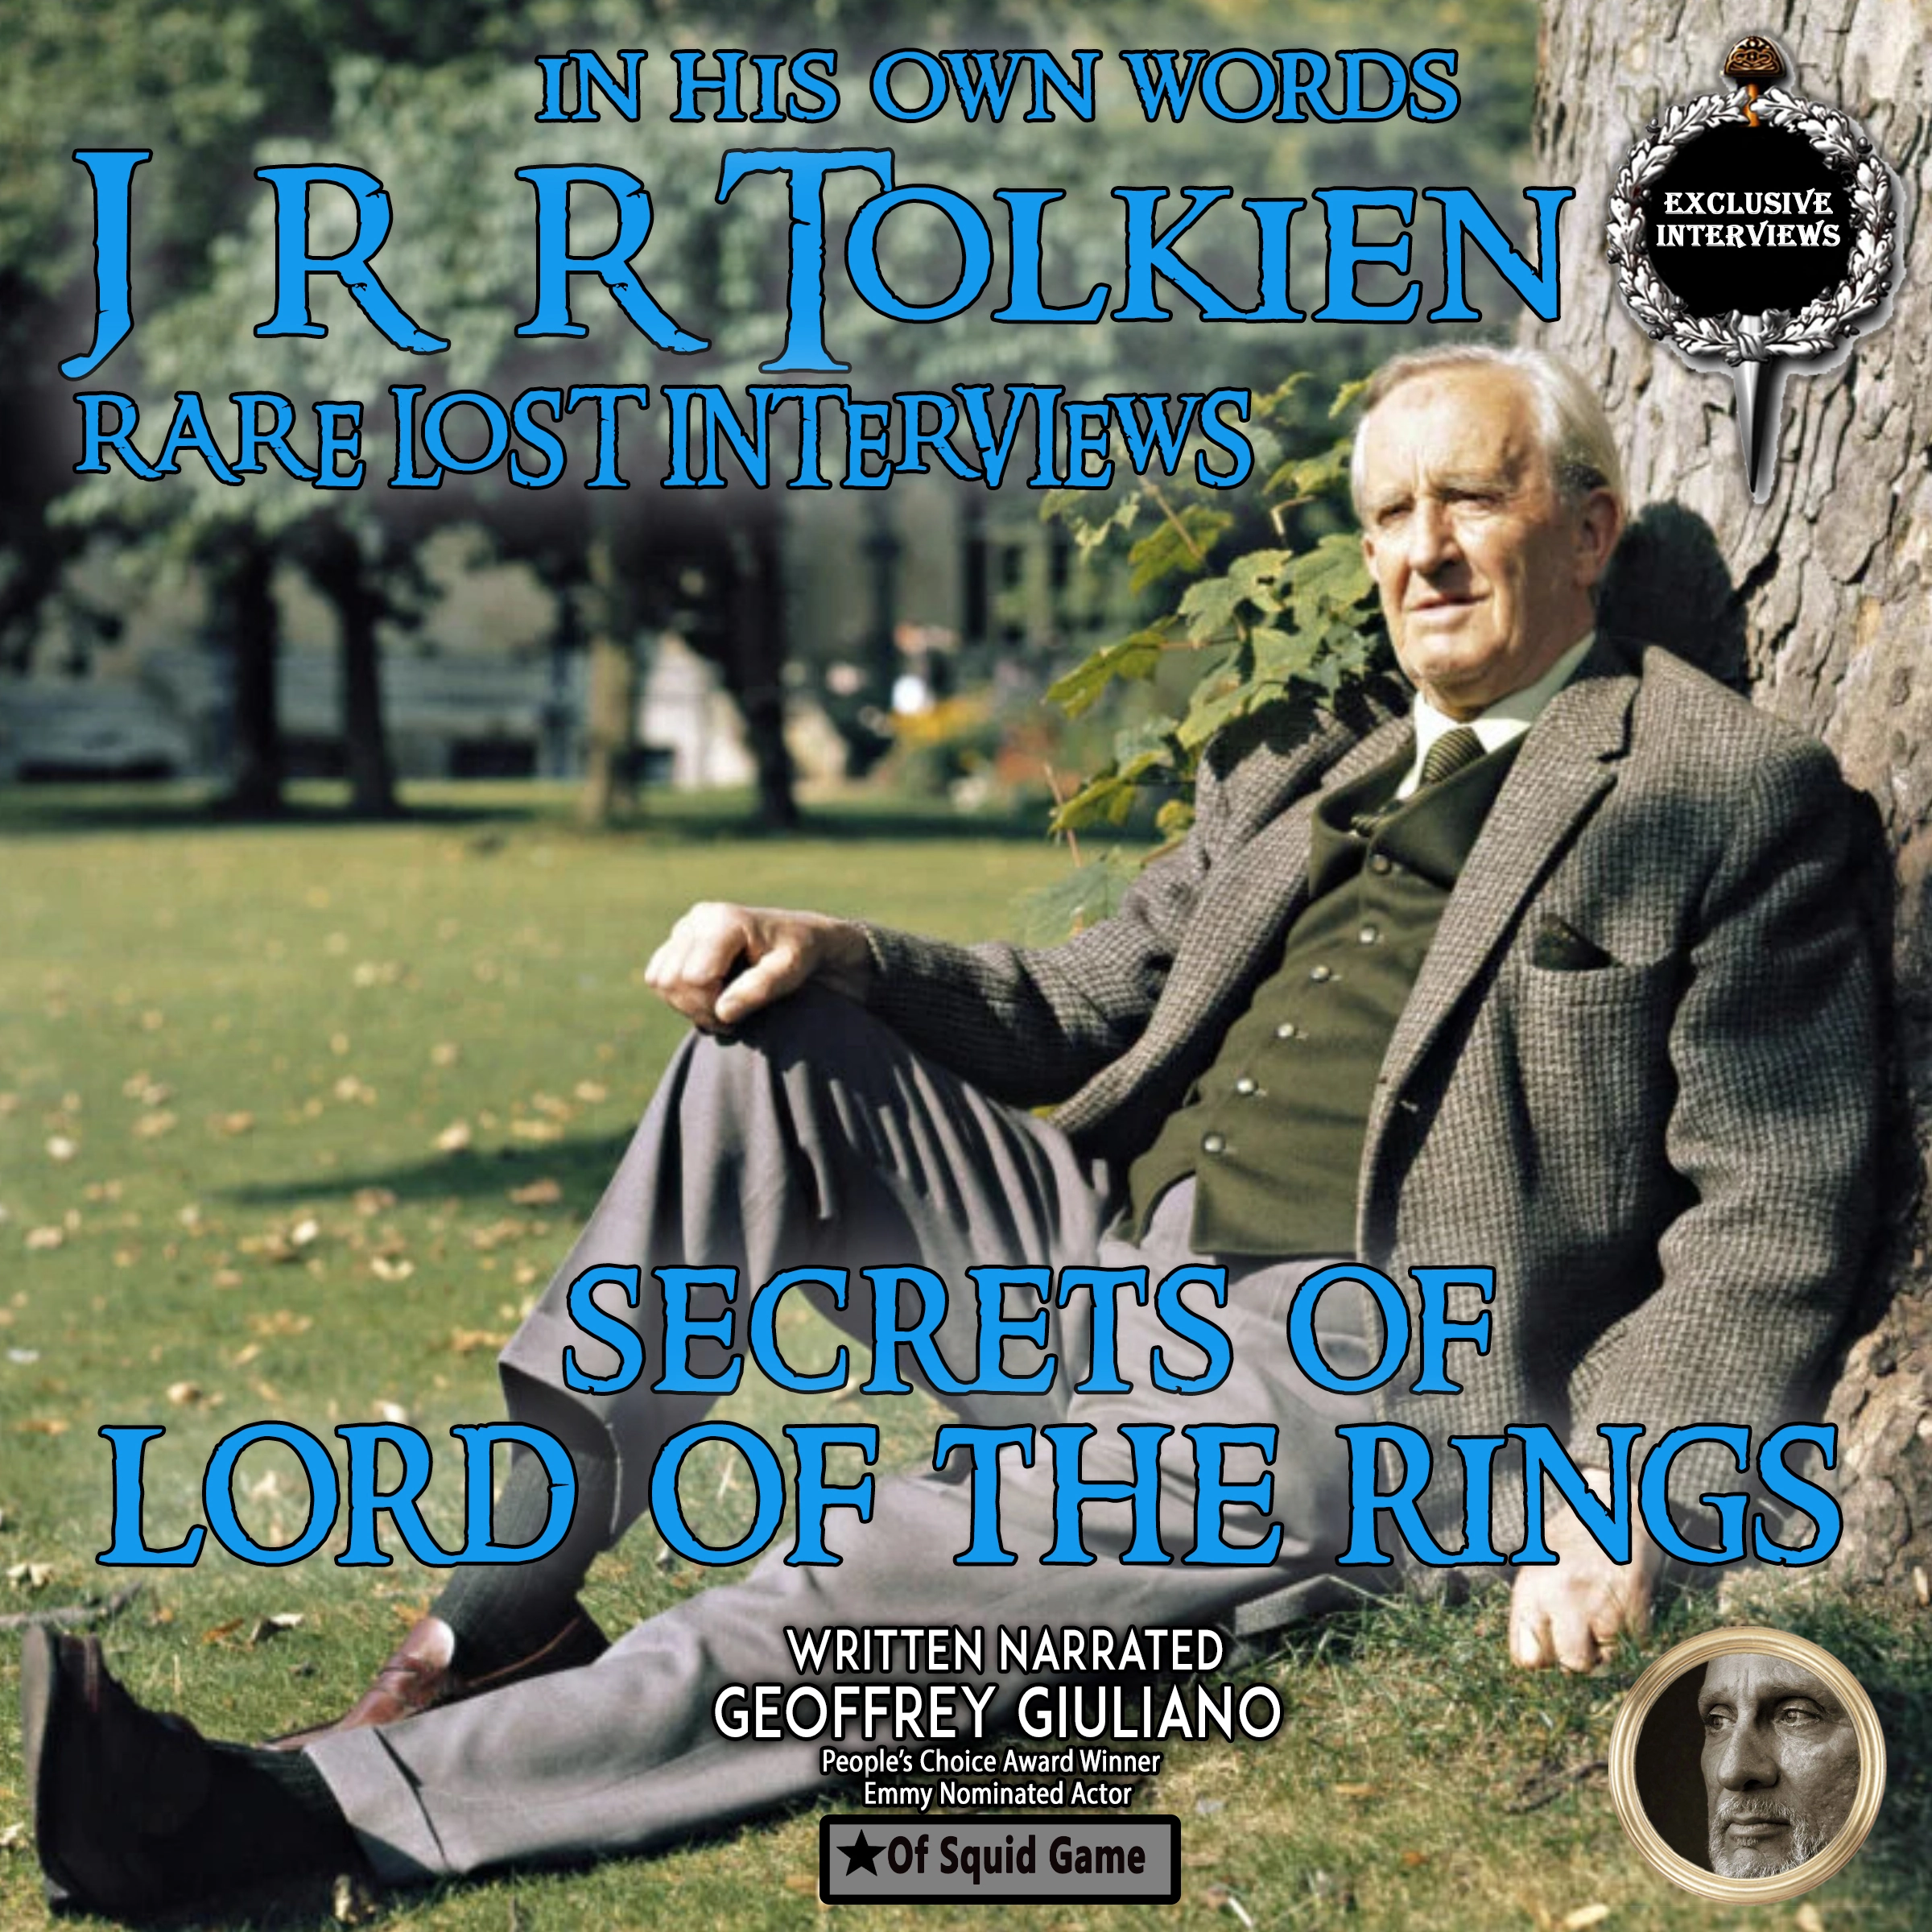 J. R. R. Tolkien In His Own Words by Geoffrey Giuliano Audiobook